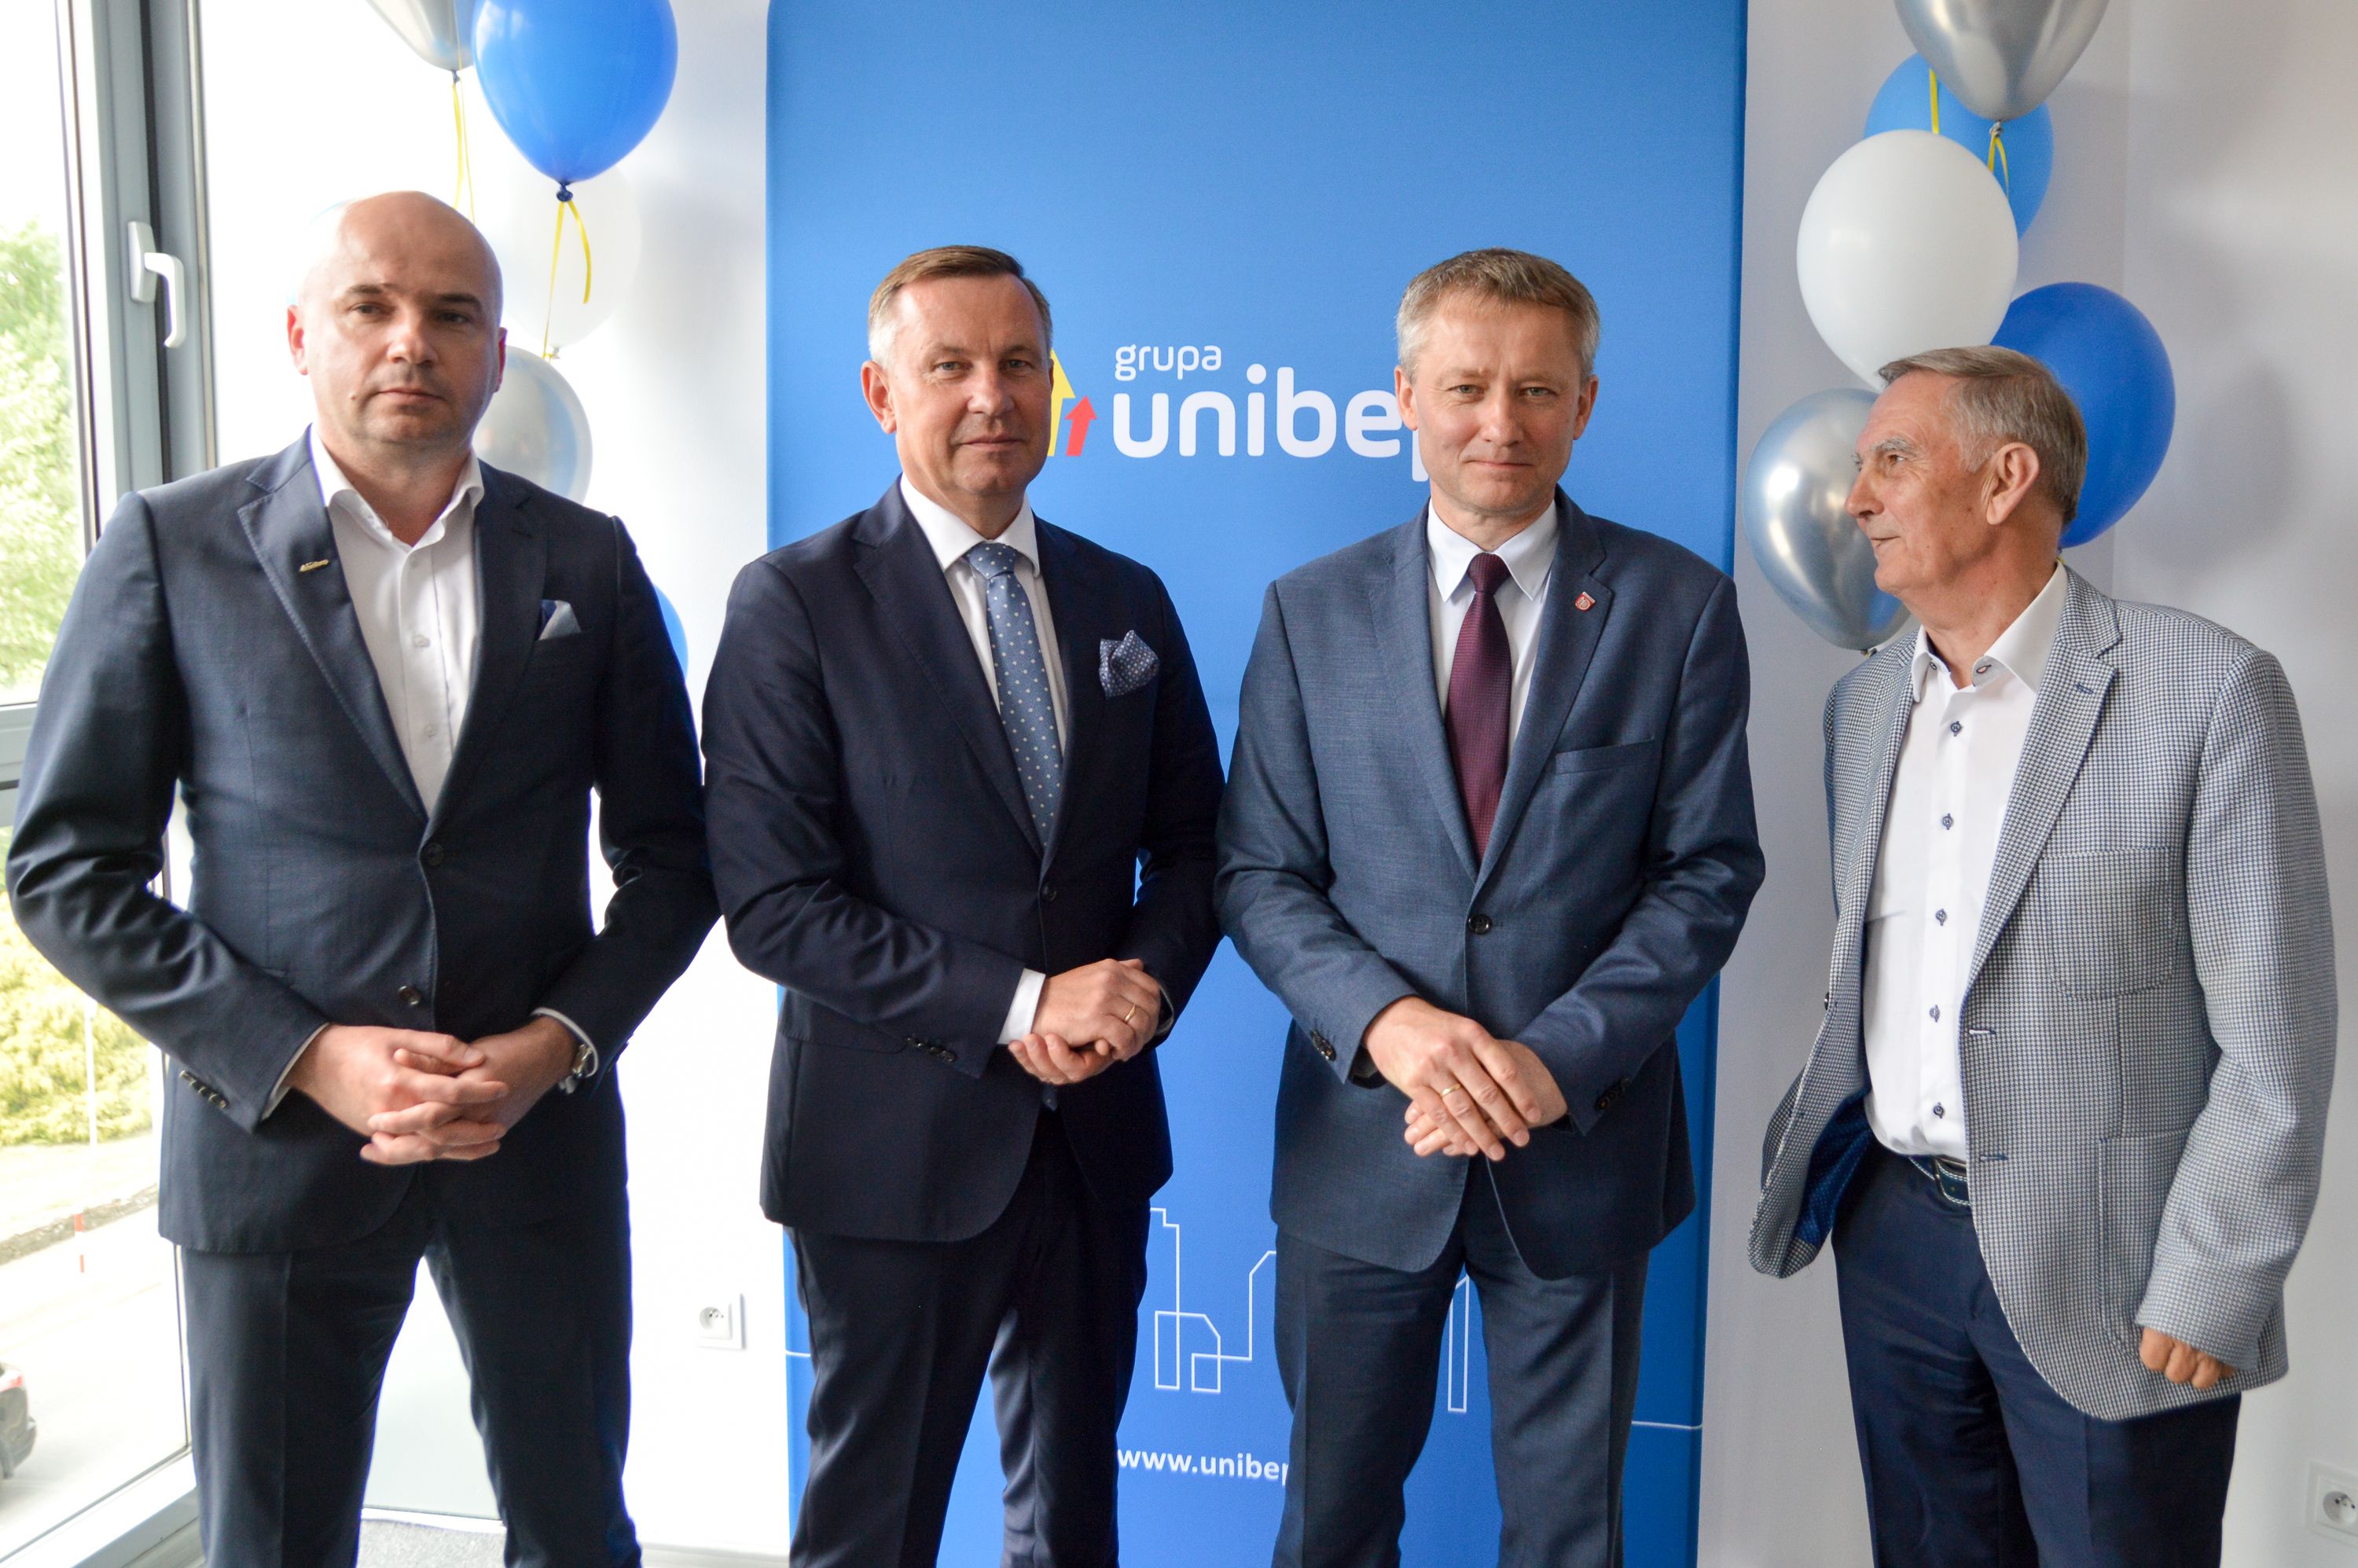 Unibep SA has opened an office in Racibórz